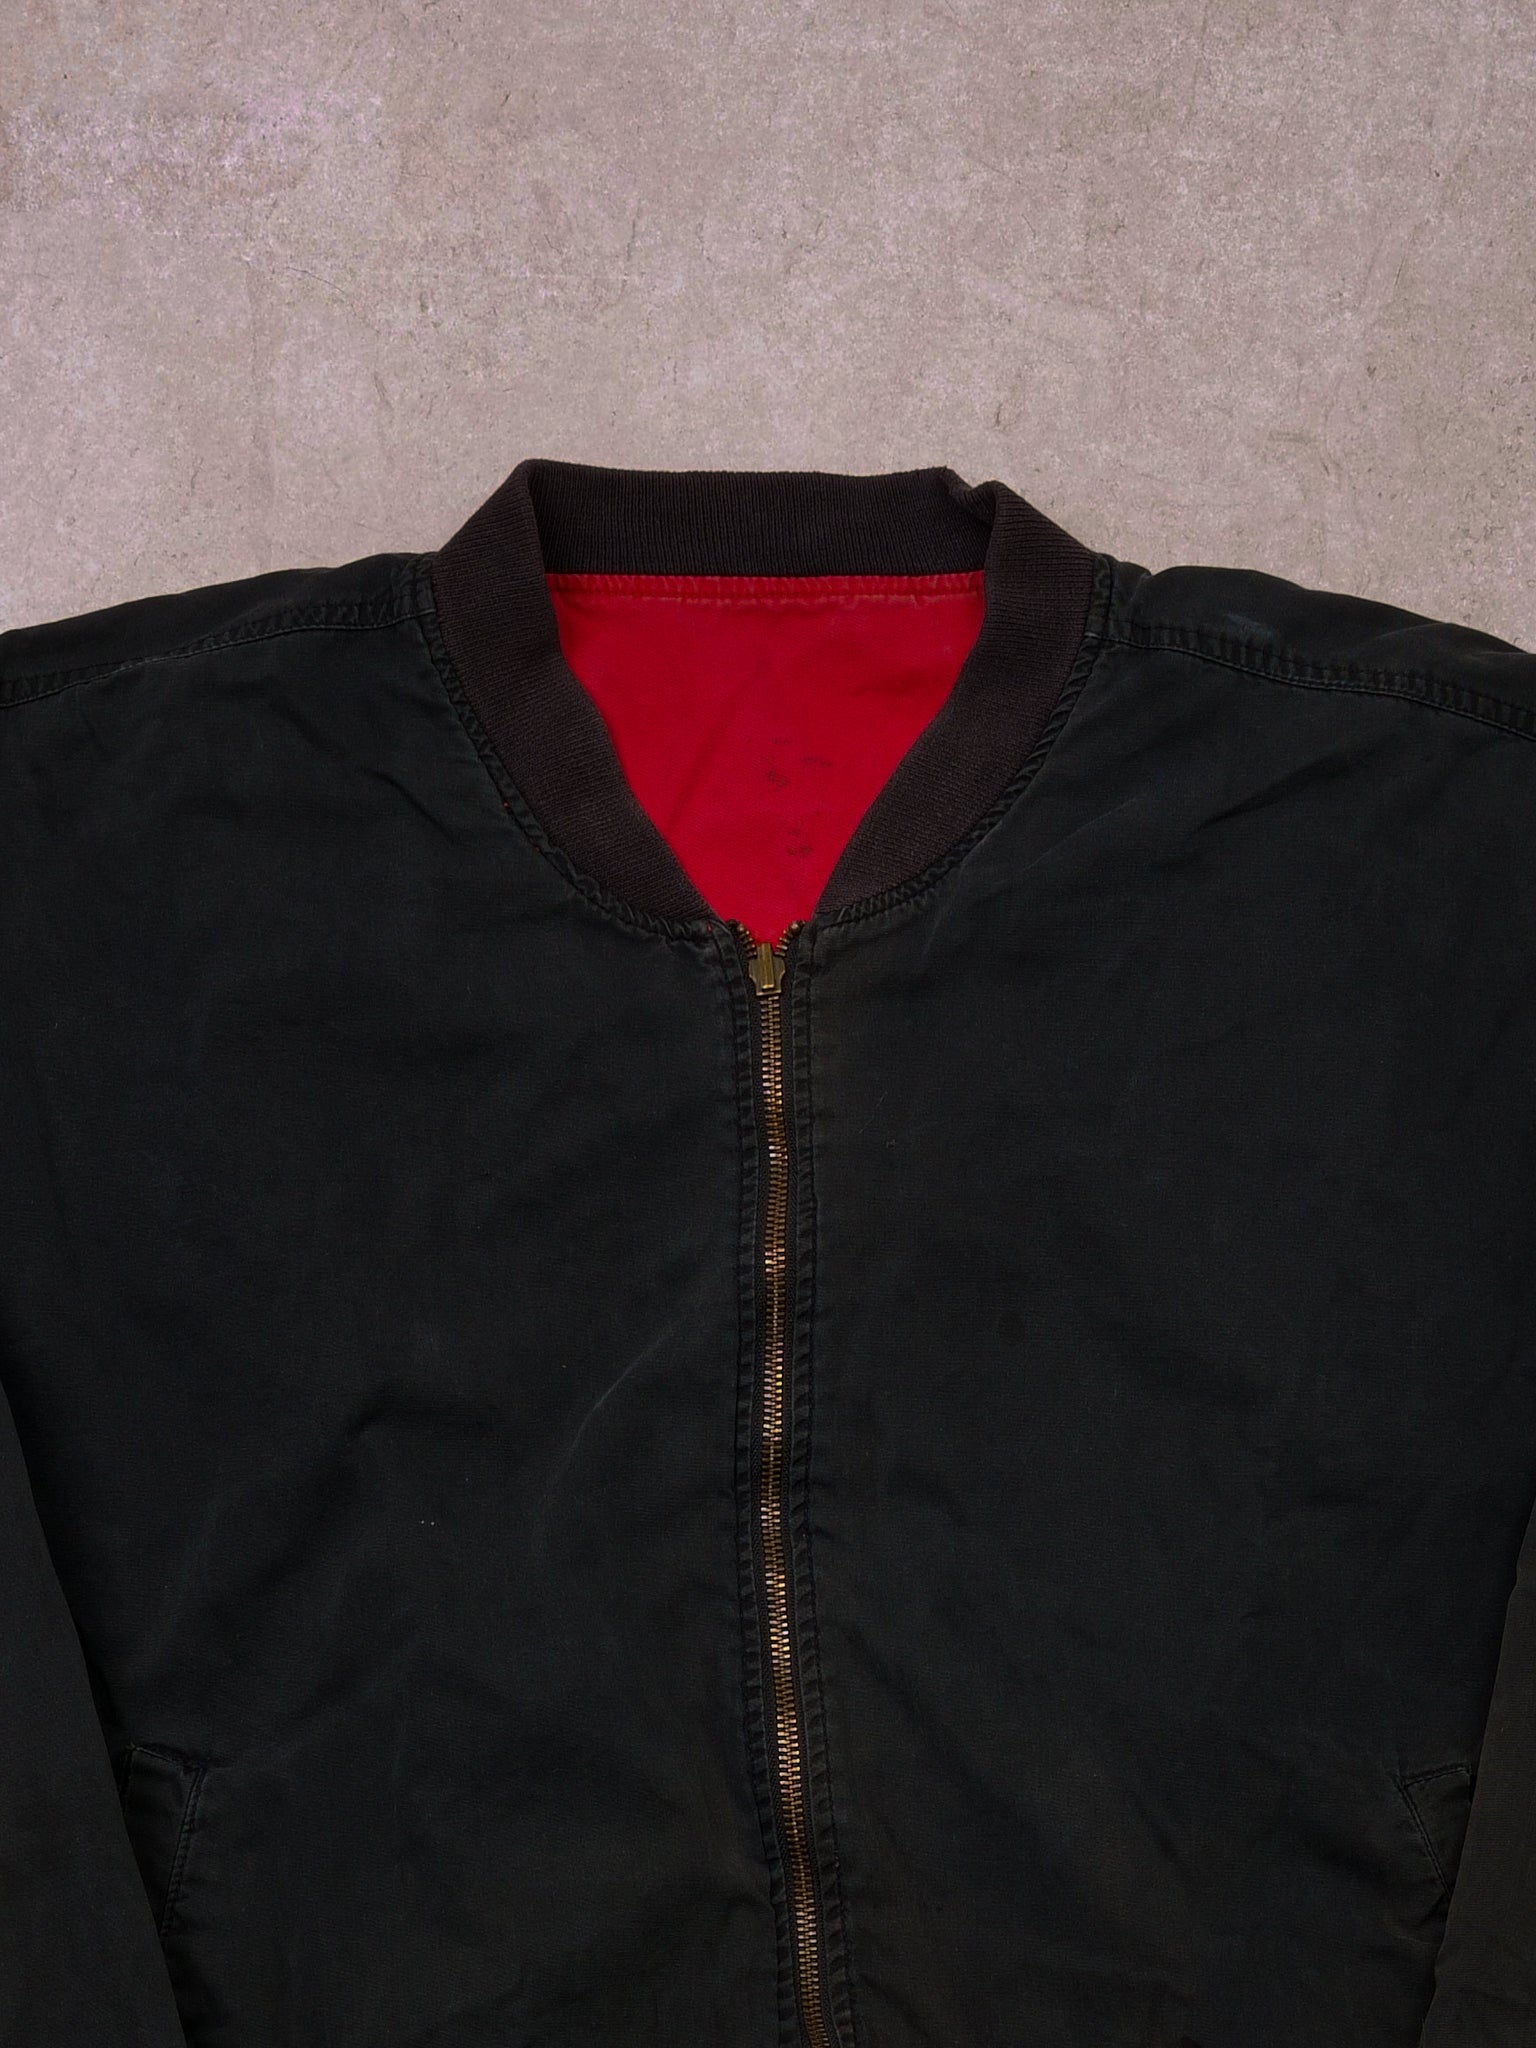 Vintage 80s Black and Red Malboro Reversible Bomber Jacket (L)